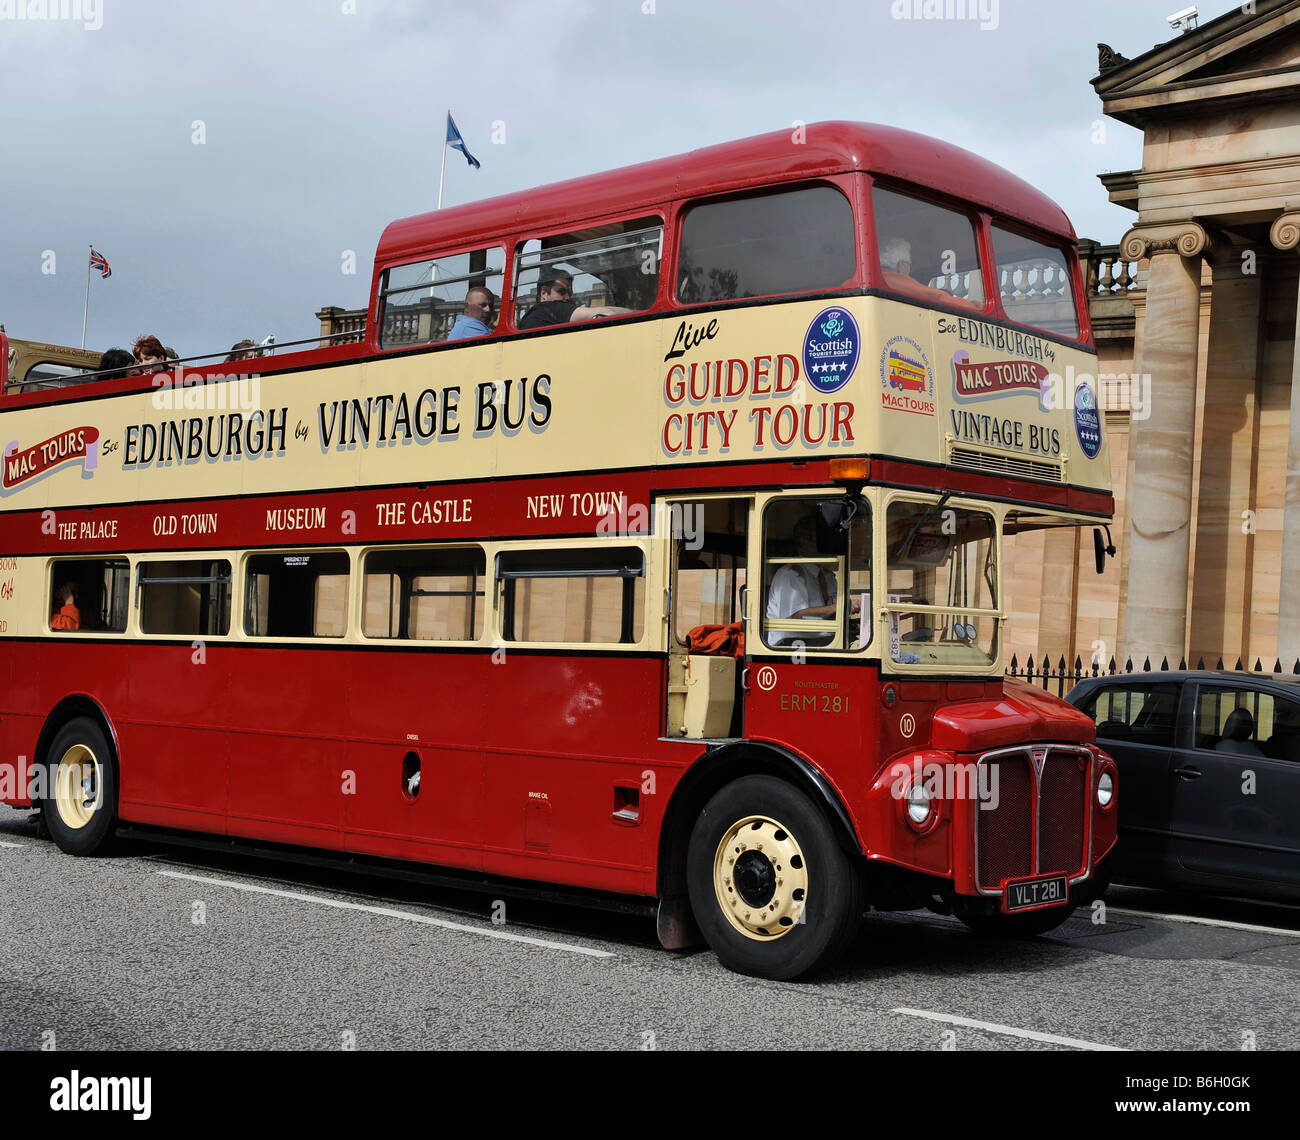 Guided city tour vintage routemaster double decker bus Edinburgh Stock Photo